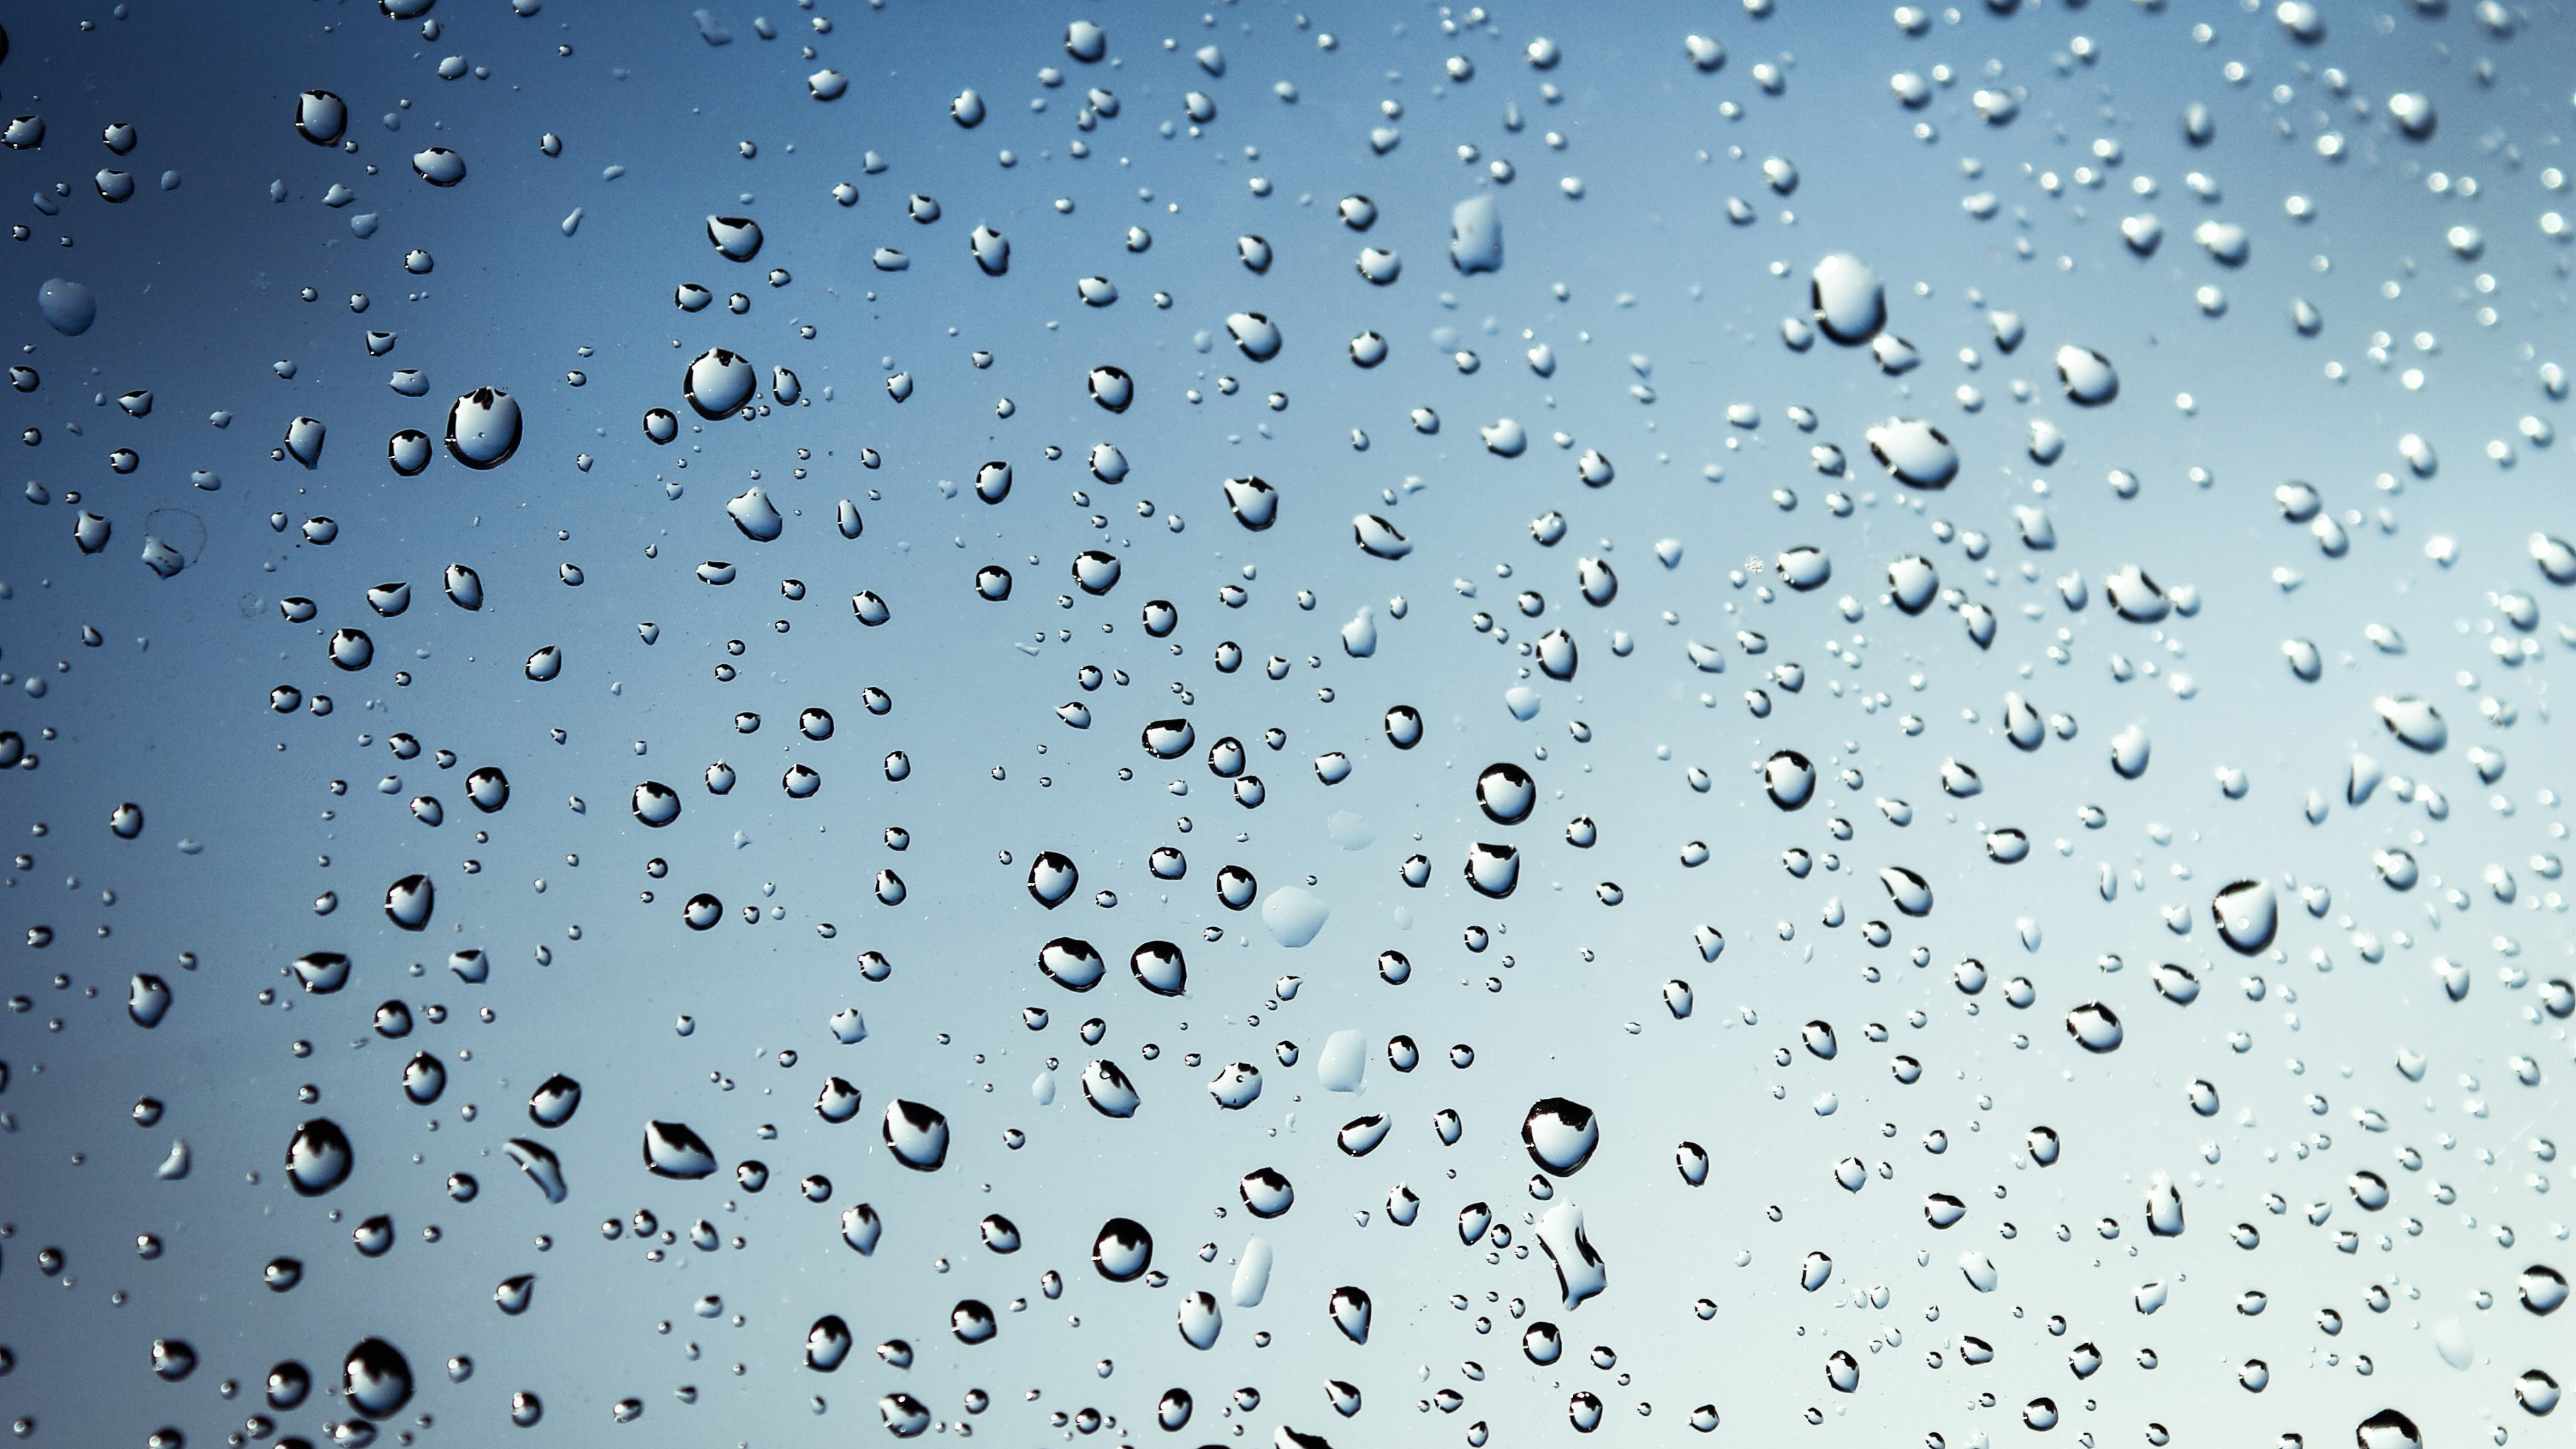 Rain drops on window wallpaper 3840x2160